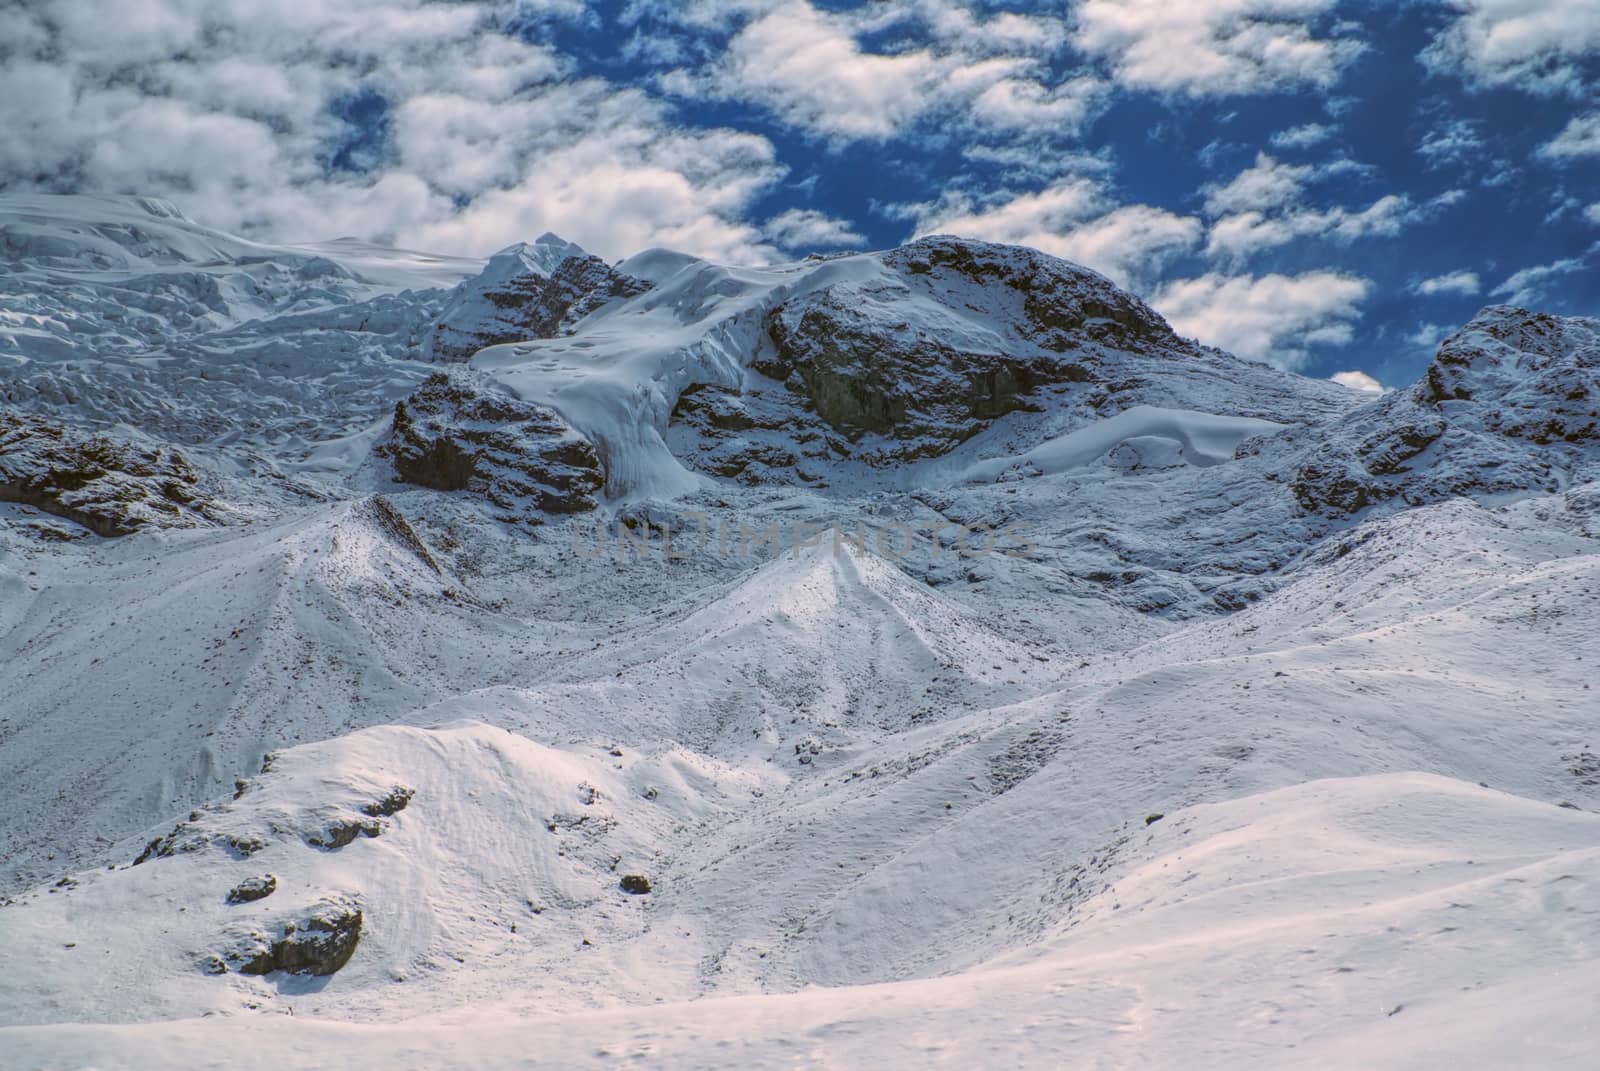 Ausangate, Andes by MichalKnitl